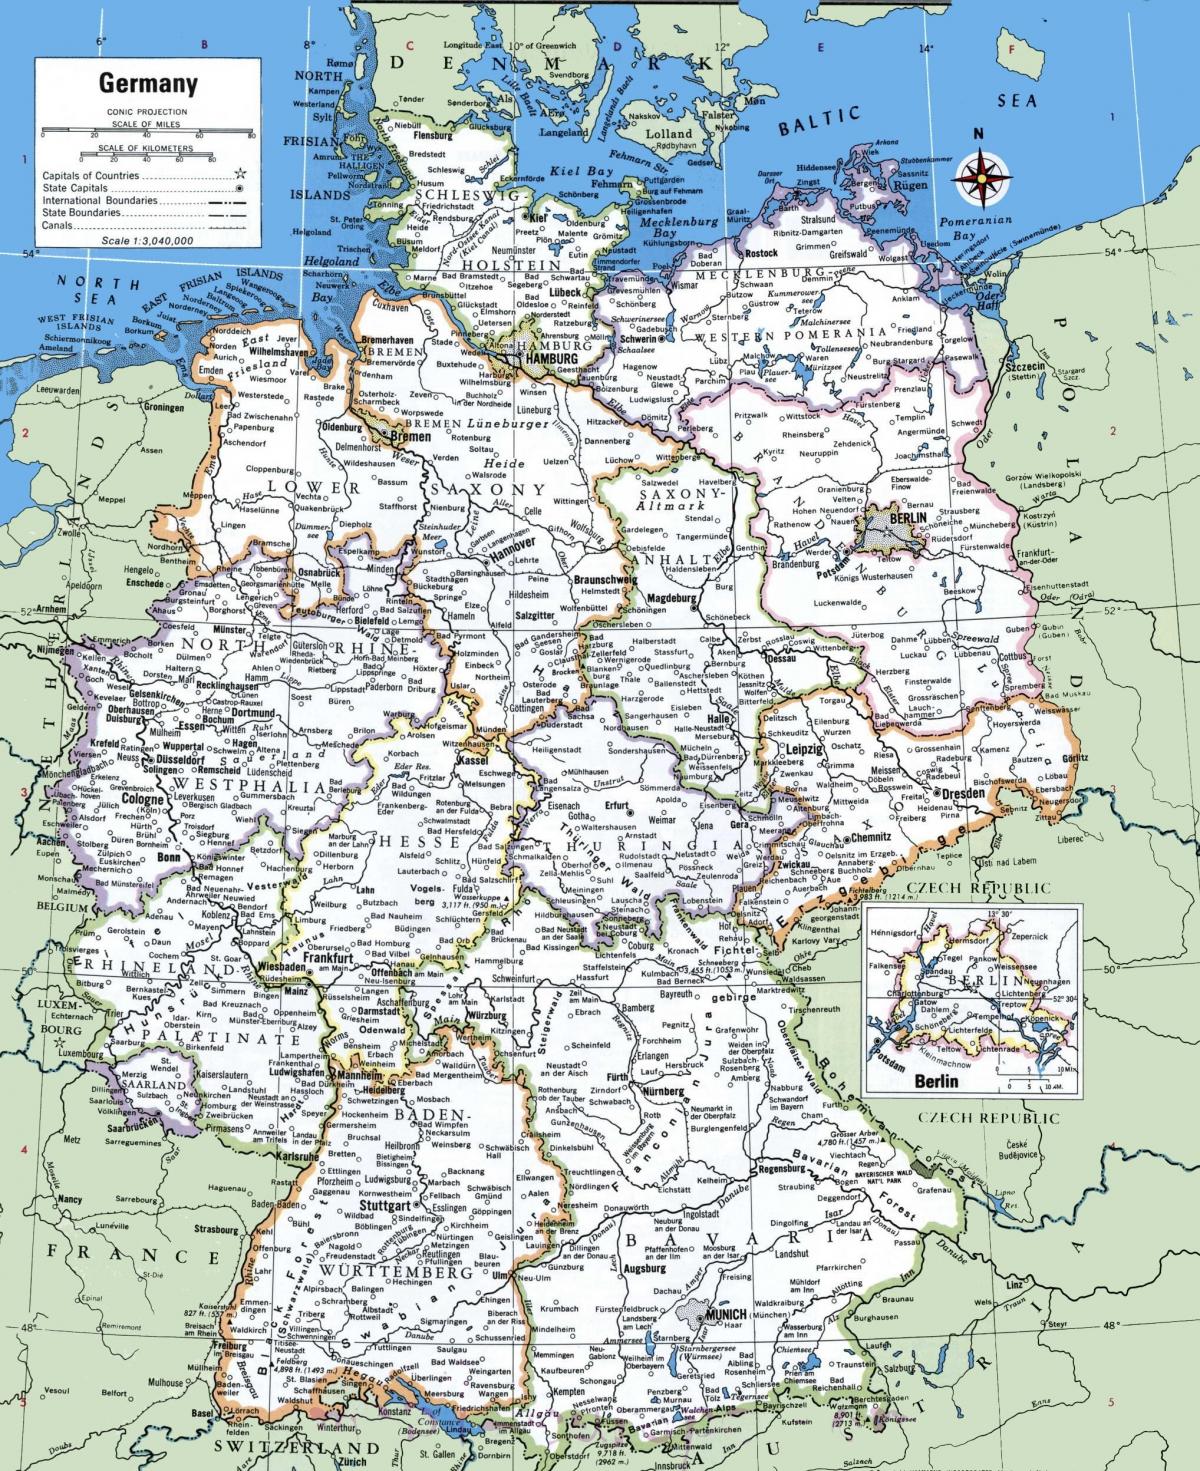 Duitse stadsplattegrond